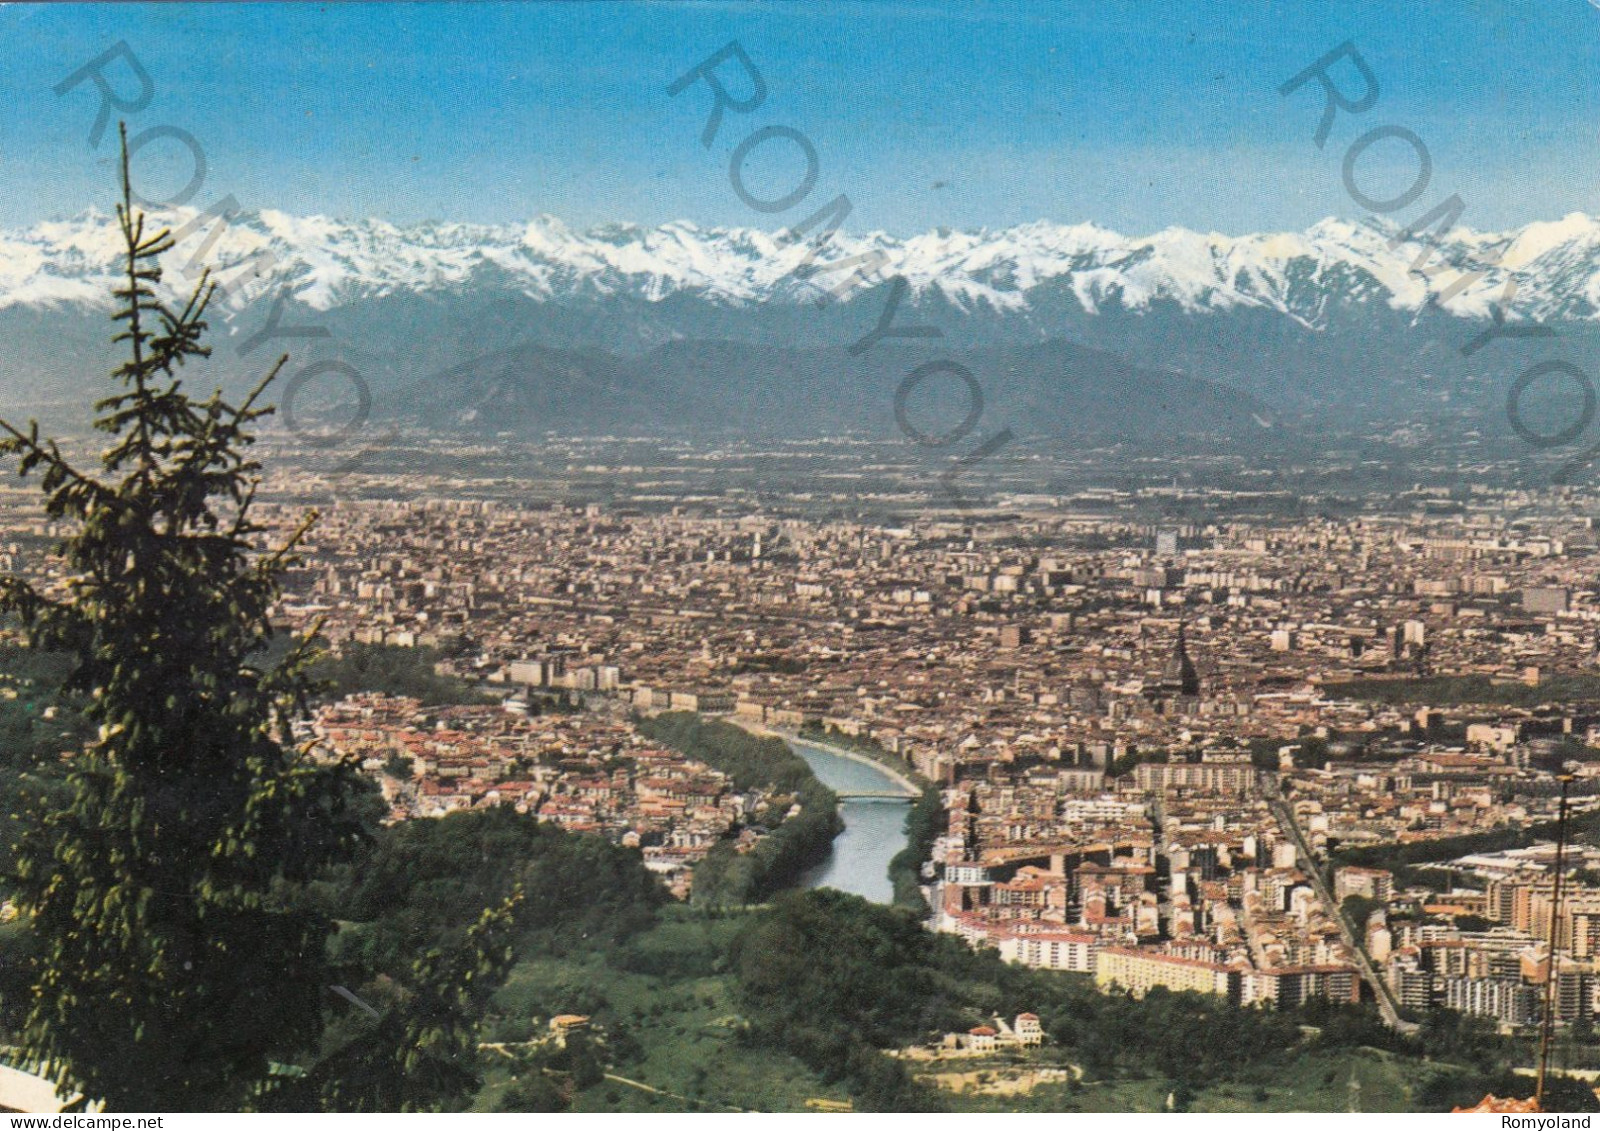 CARTOLINA  B15 TORINO,PIEMONTE-PANORAMA-STORIA,CULTURA,MEMORIA,RELIGIONE,IMPERO ROMANO,BELLA ITALIA,VIAGGIATA 1976 - Panoramic Views